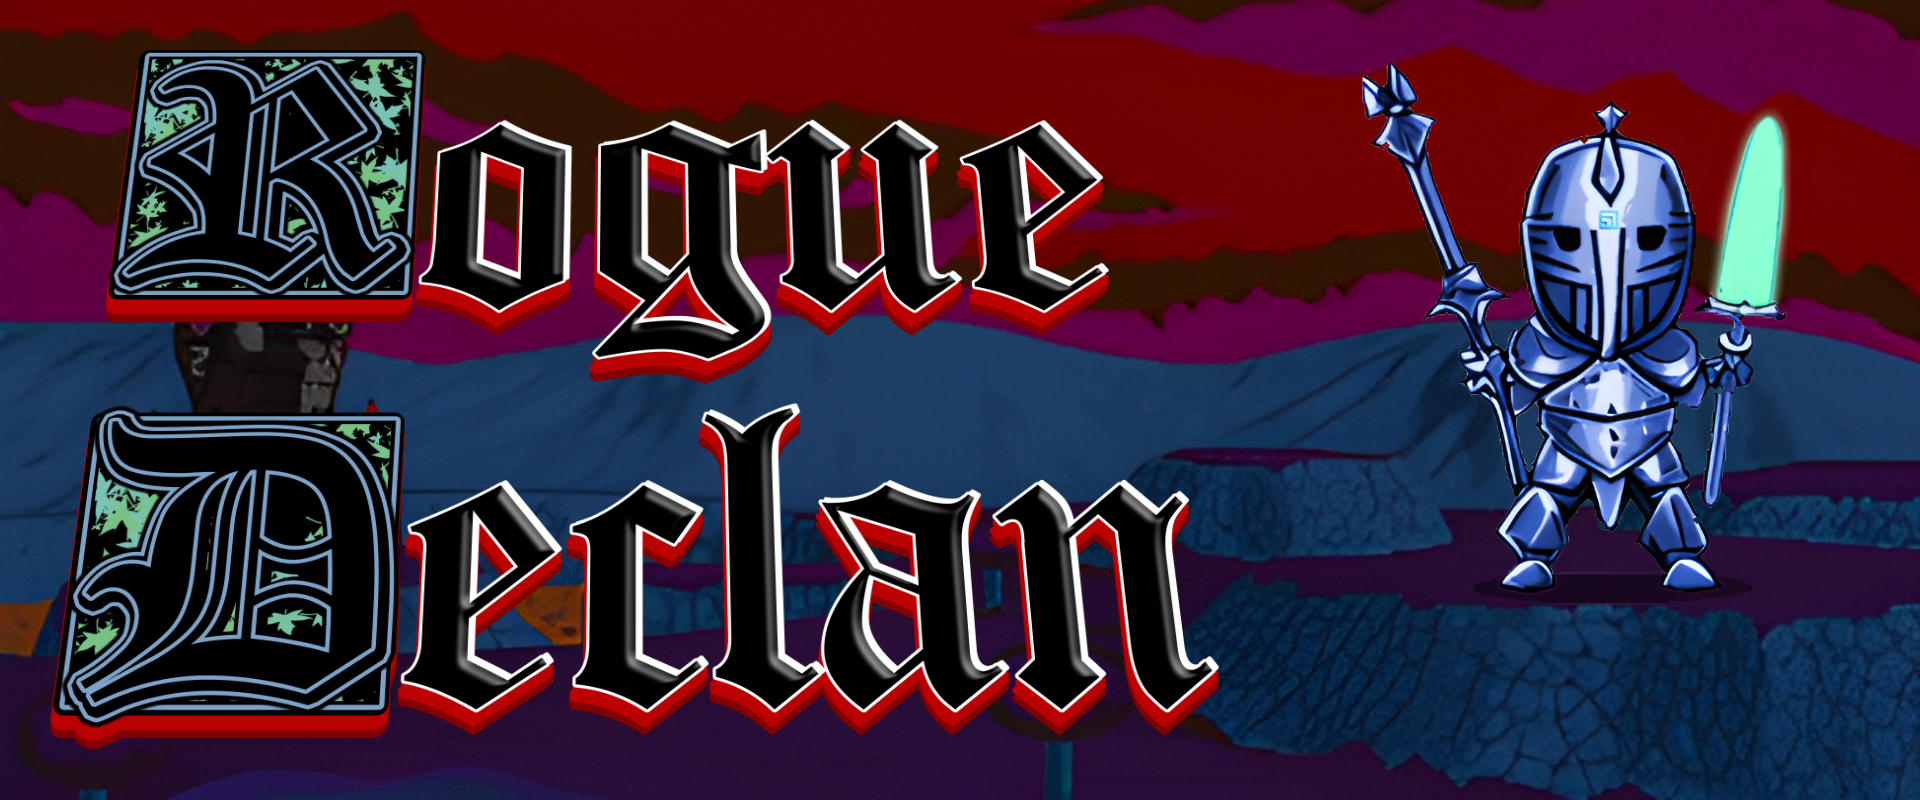 Rogue Declan (Amiga) (AmiGameJam Winner)